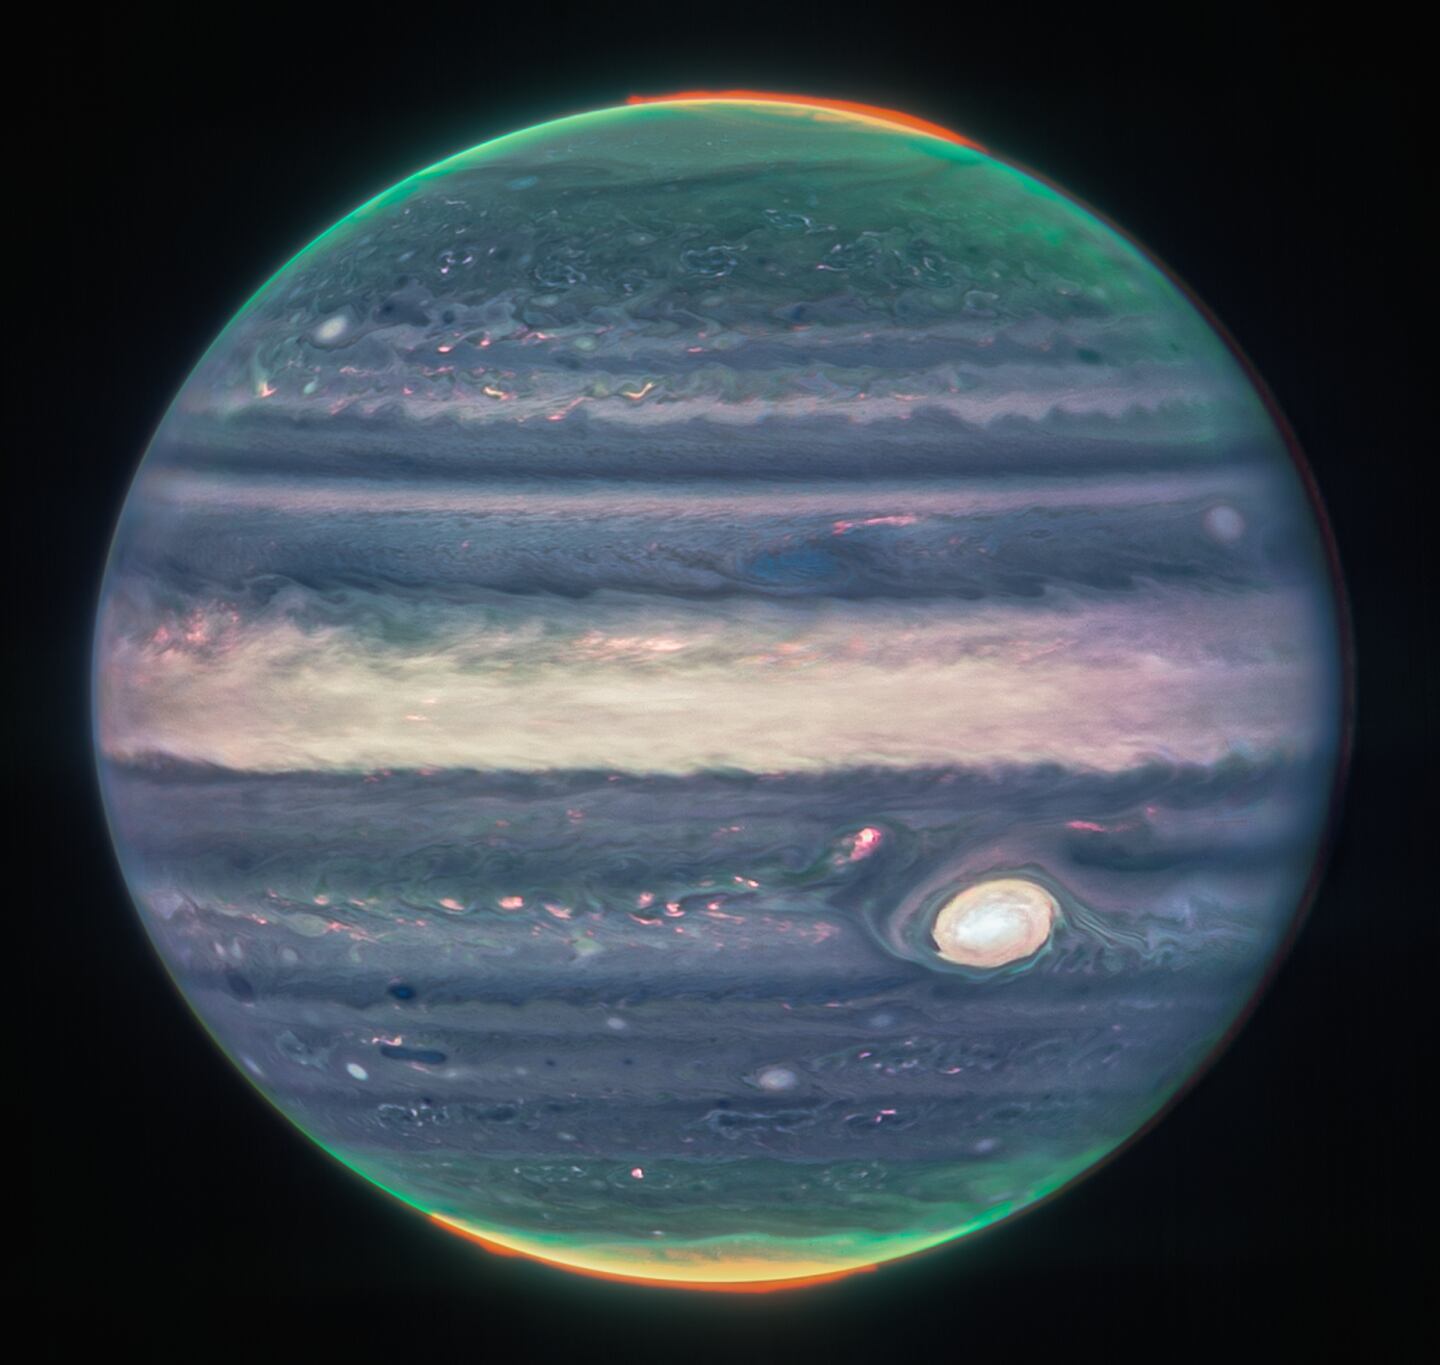 Image of Jupiter taken by the James Webb Telescope